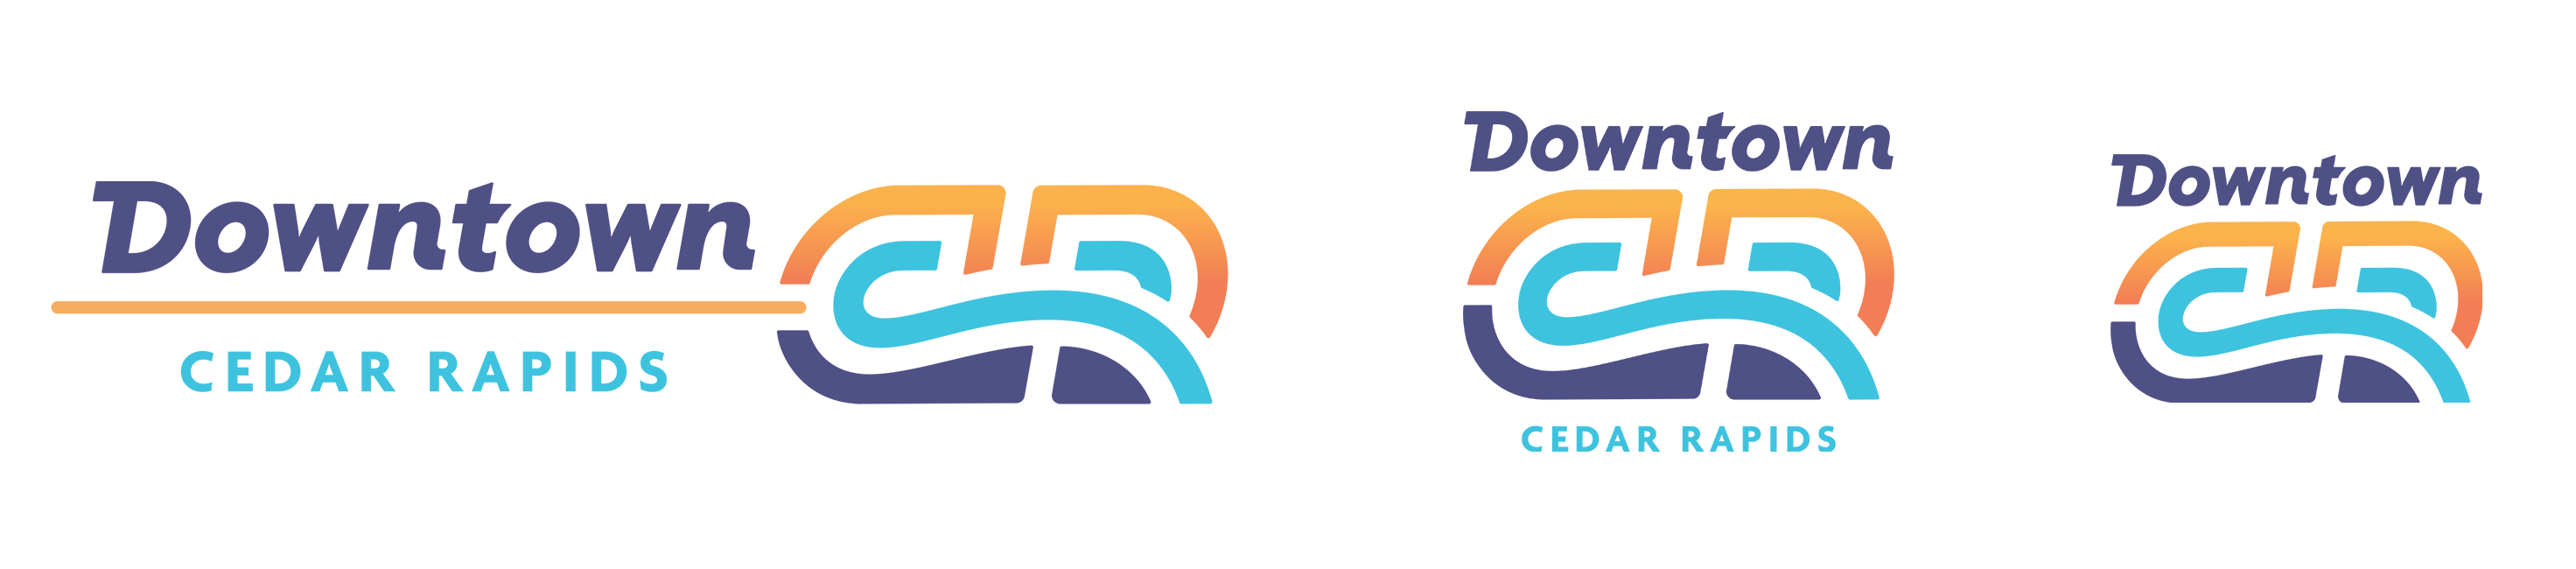 DTCR Logos Responsive